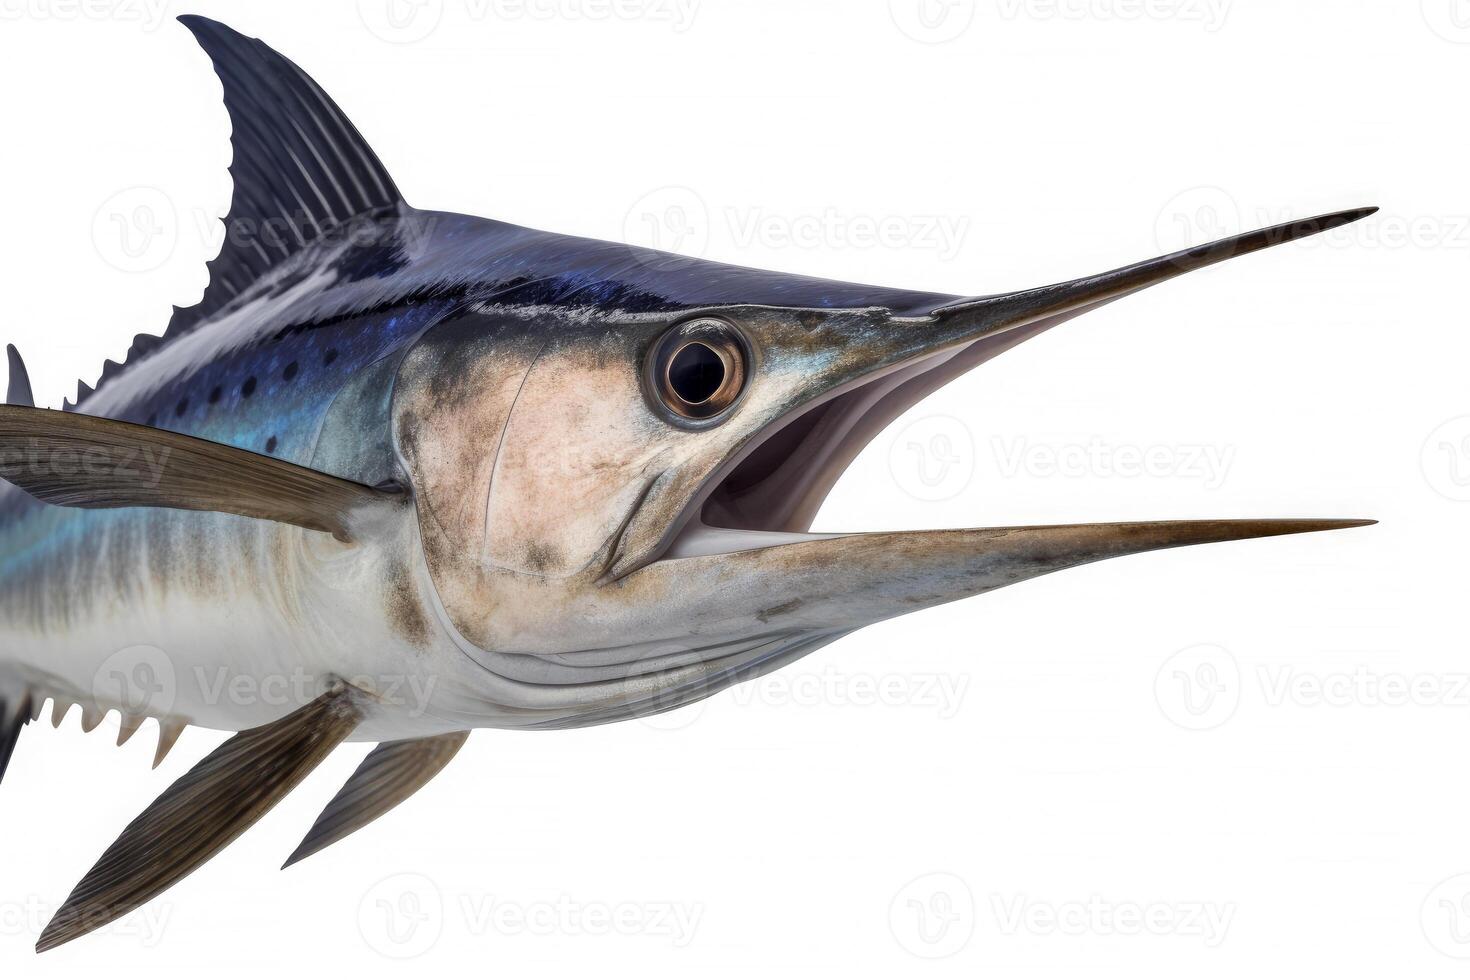 Marlin Swordfish marine animal isolated on white background, fish beak sharp as a sword, popular for fishing, aquatic sea diversity, with . photo